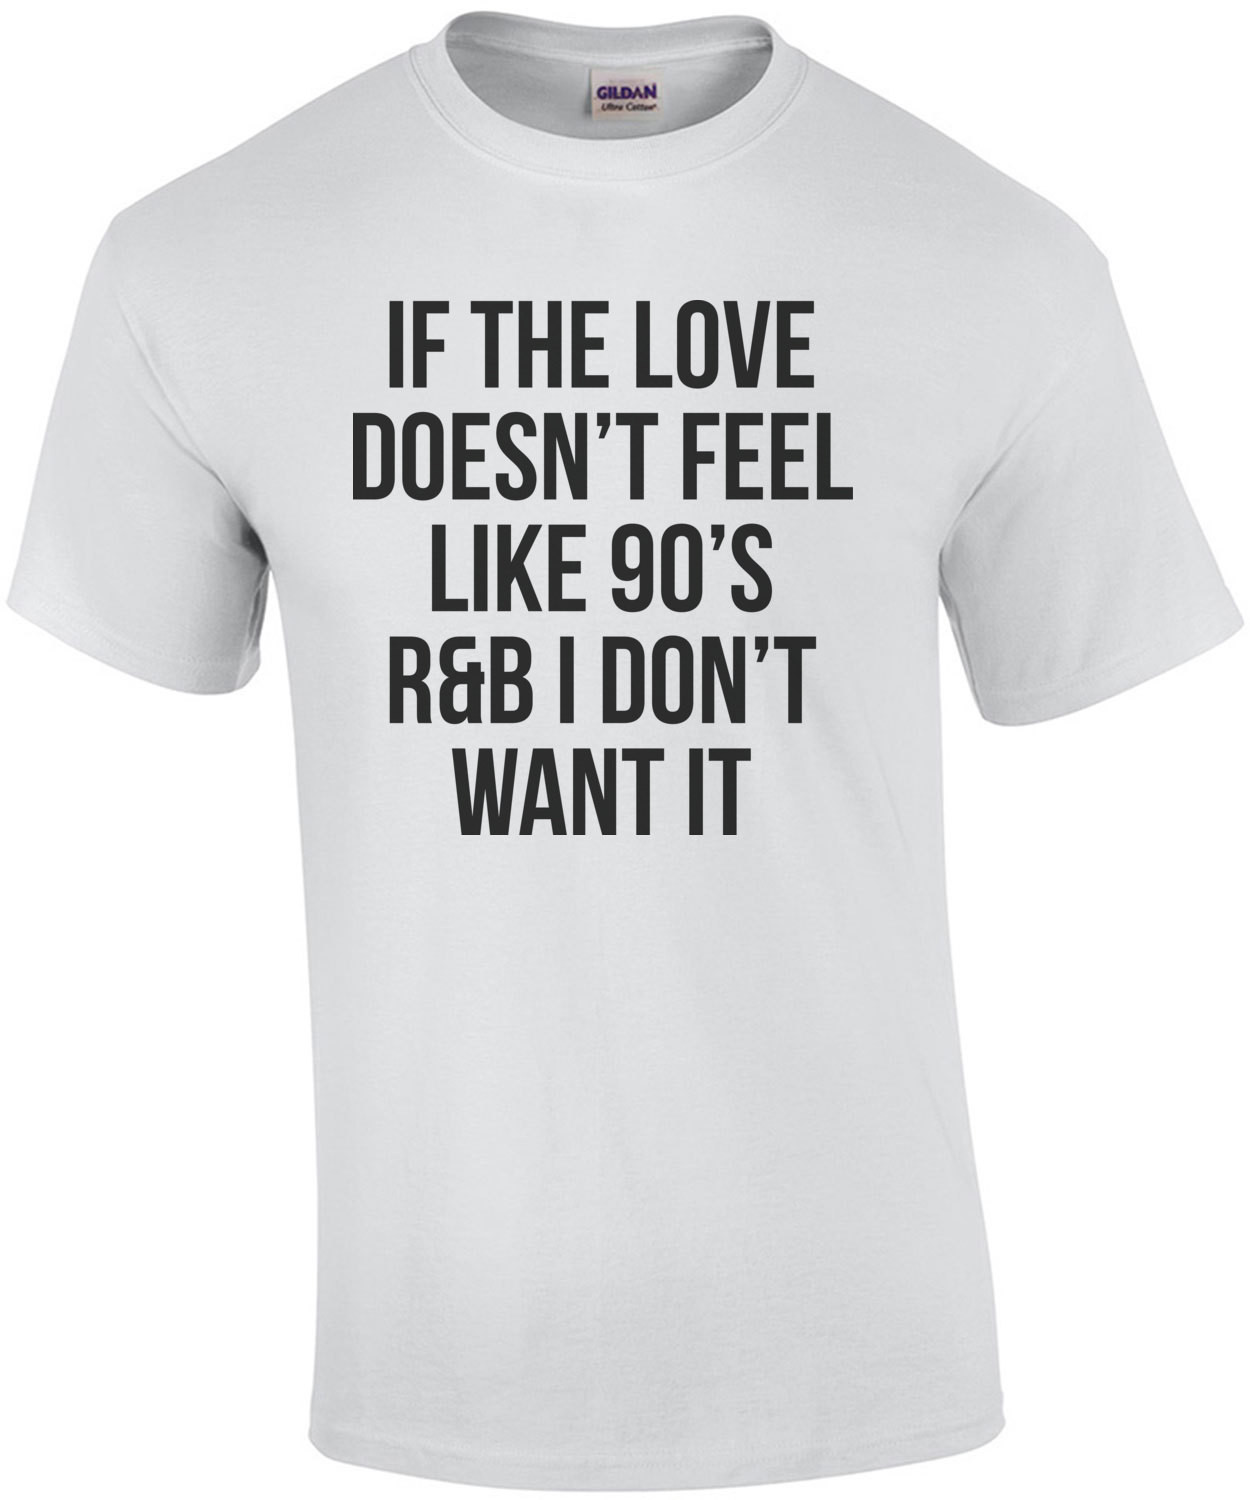 If The Love Doesn't Feel Like 90's R&B I Don't Want It Shirt